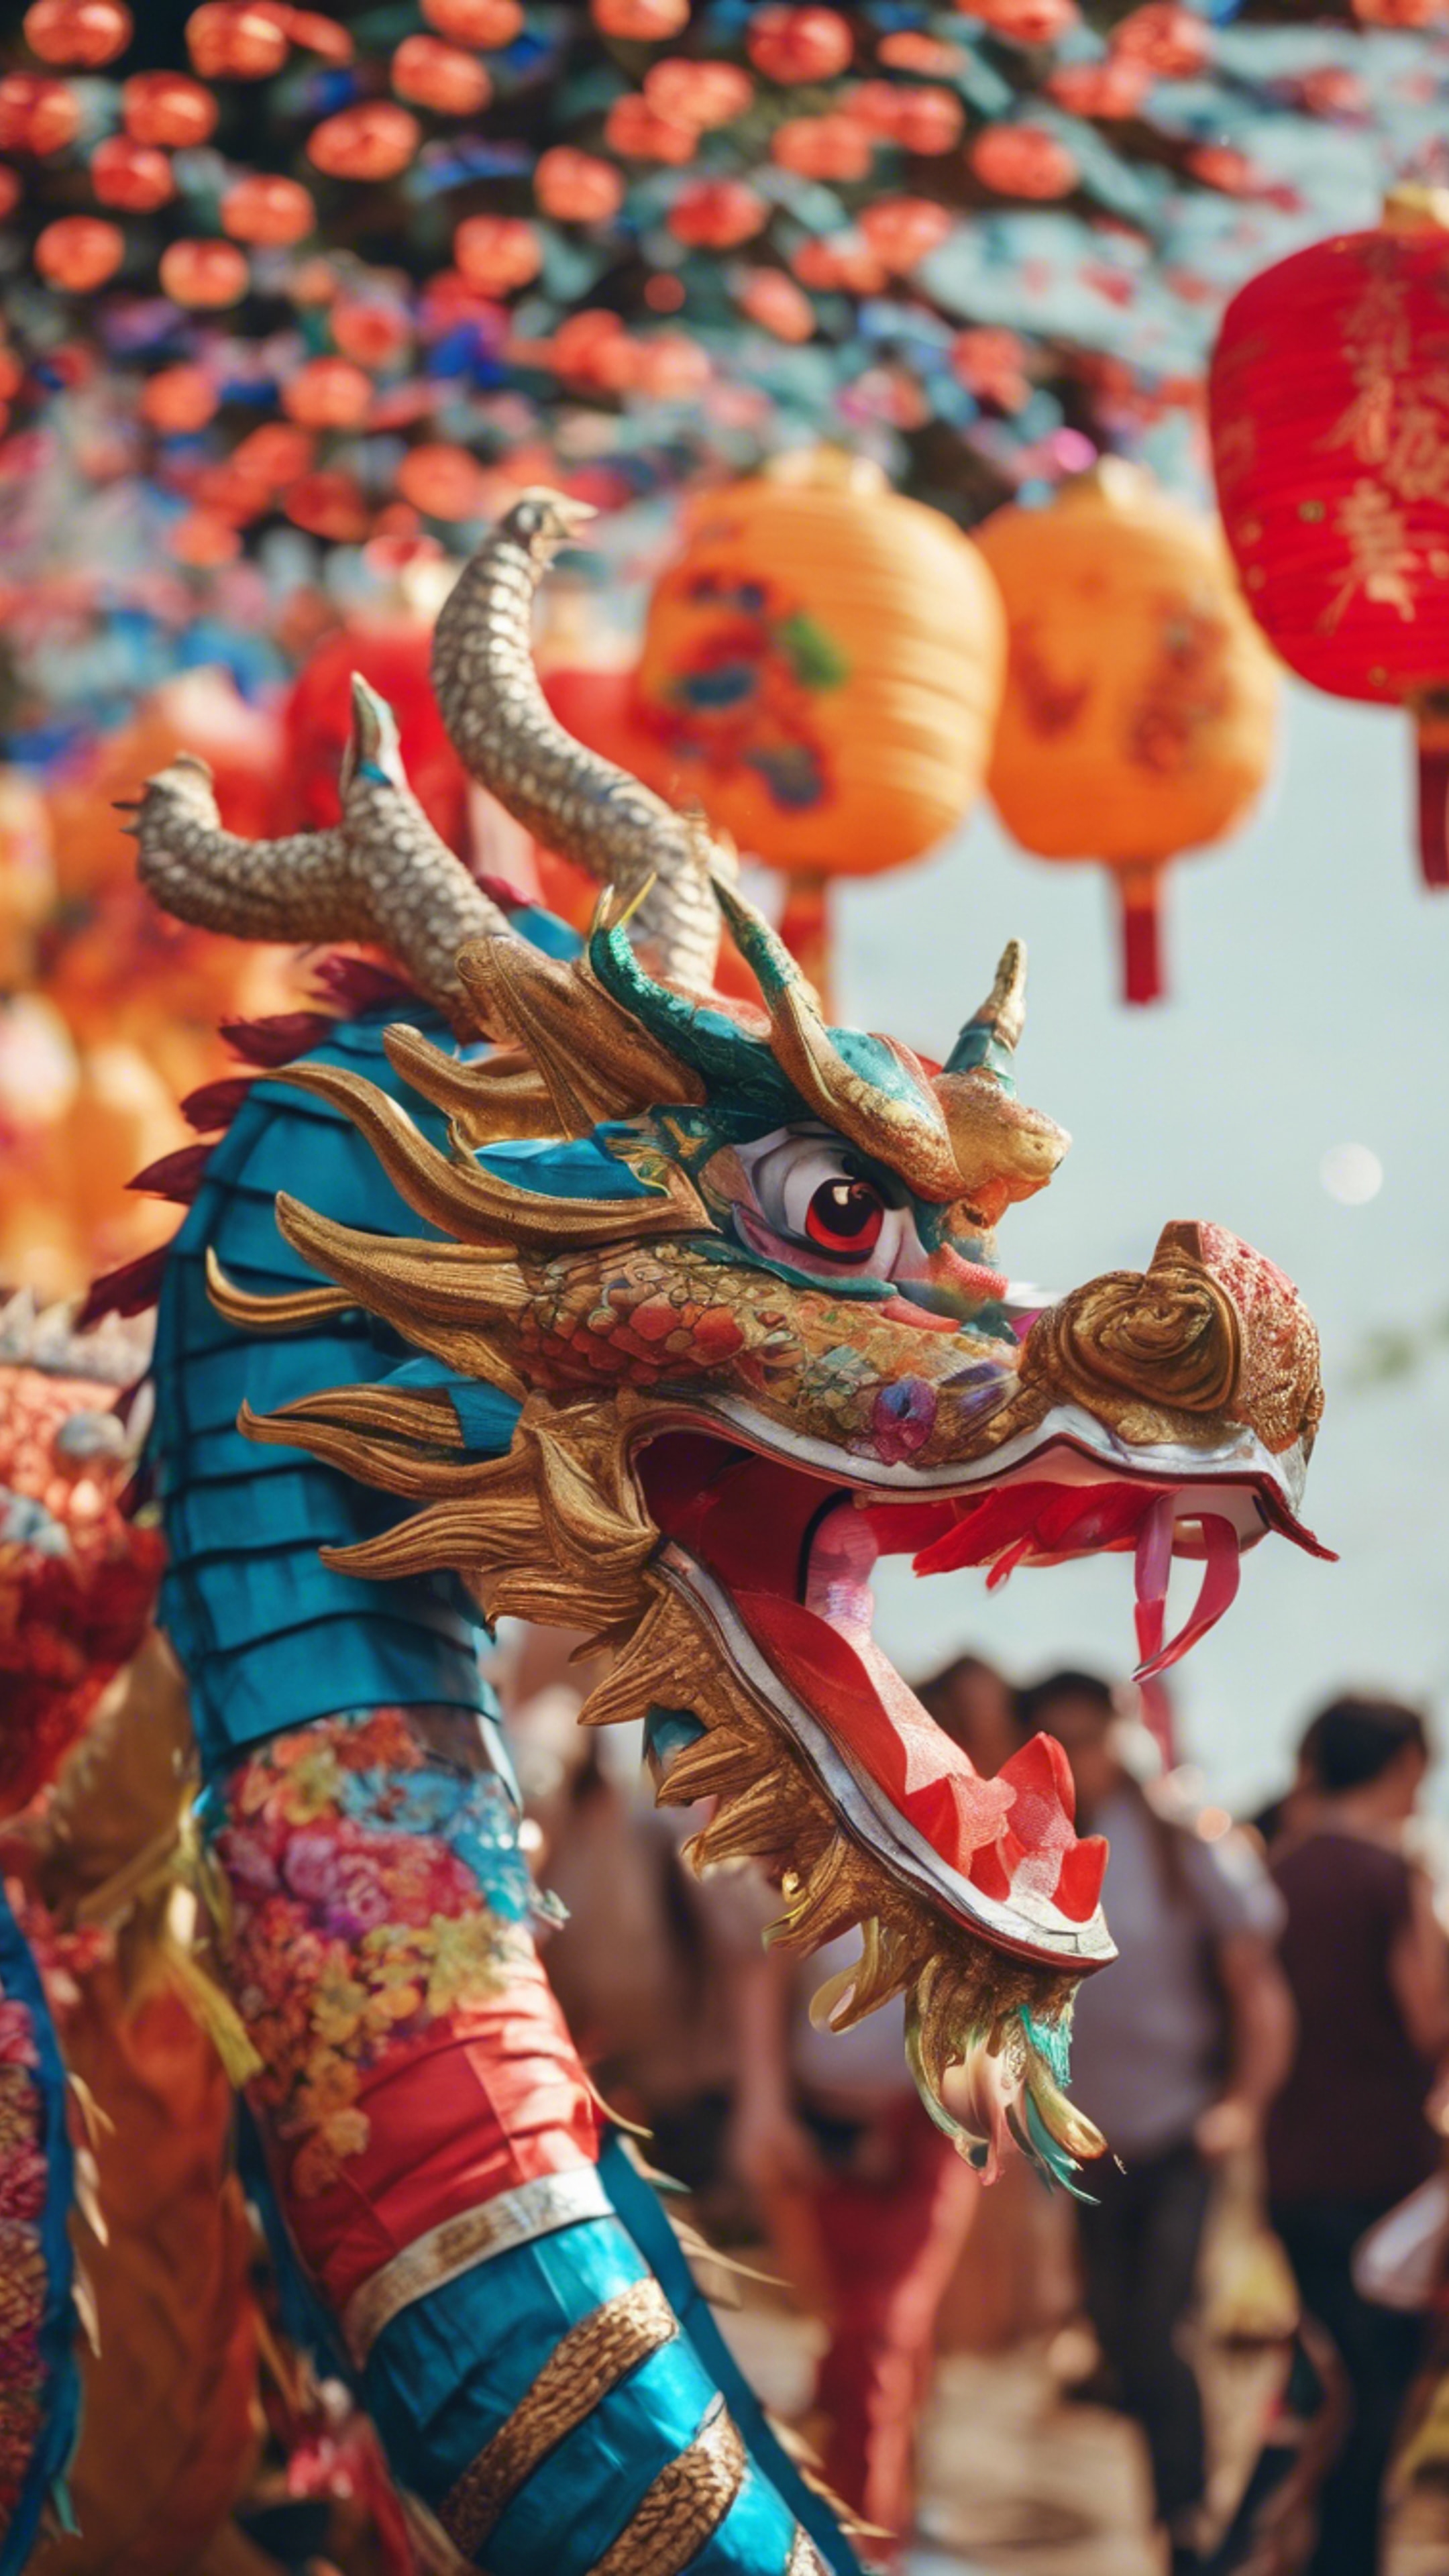 An oriental-style dragon parading amidst a colorful festival with paper lanterns. טפט[5877da5b29174274b3e8]